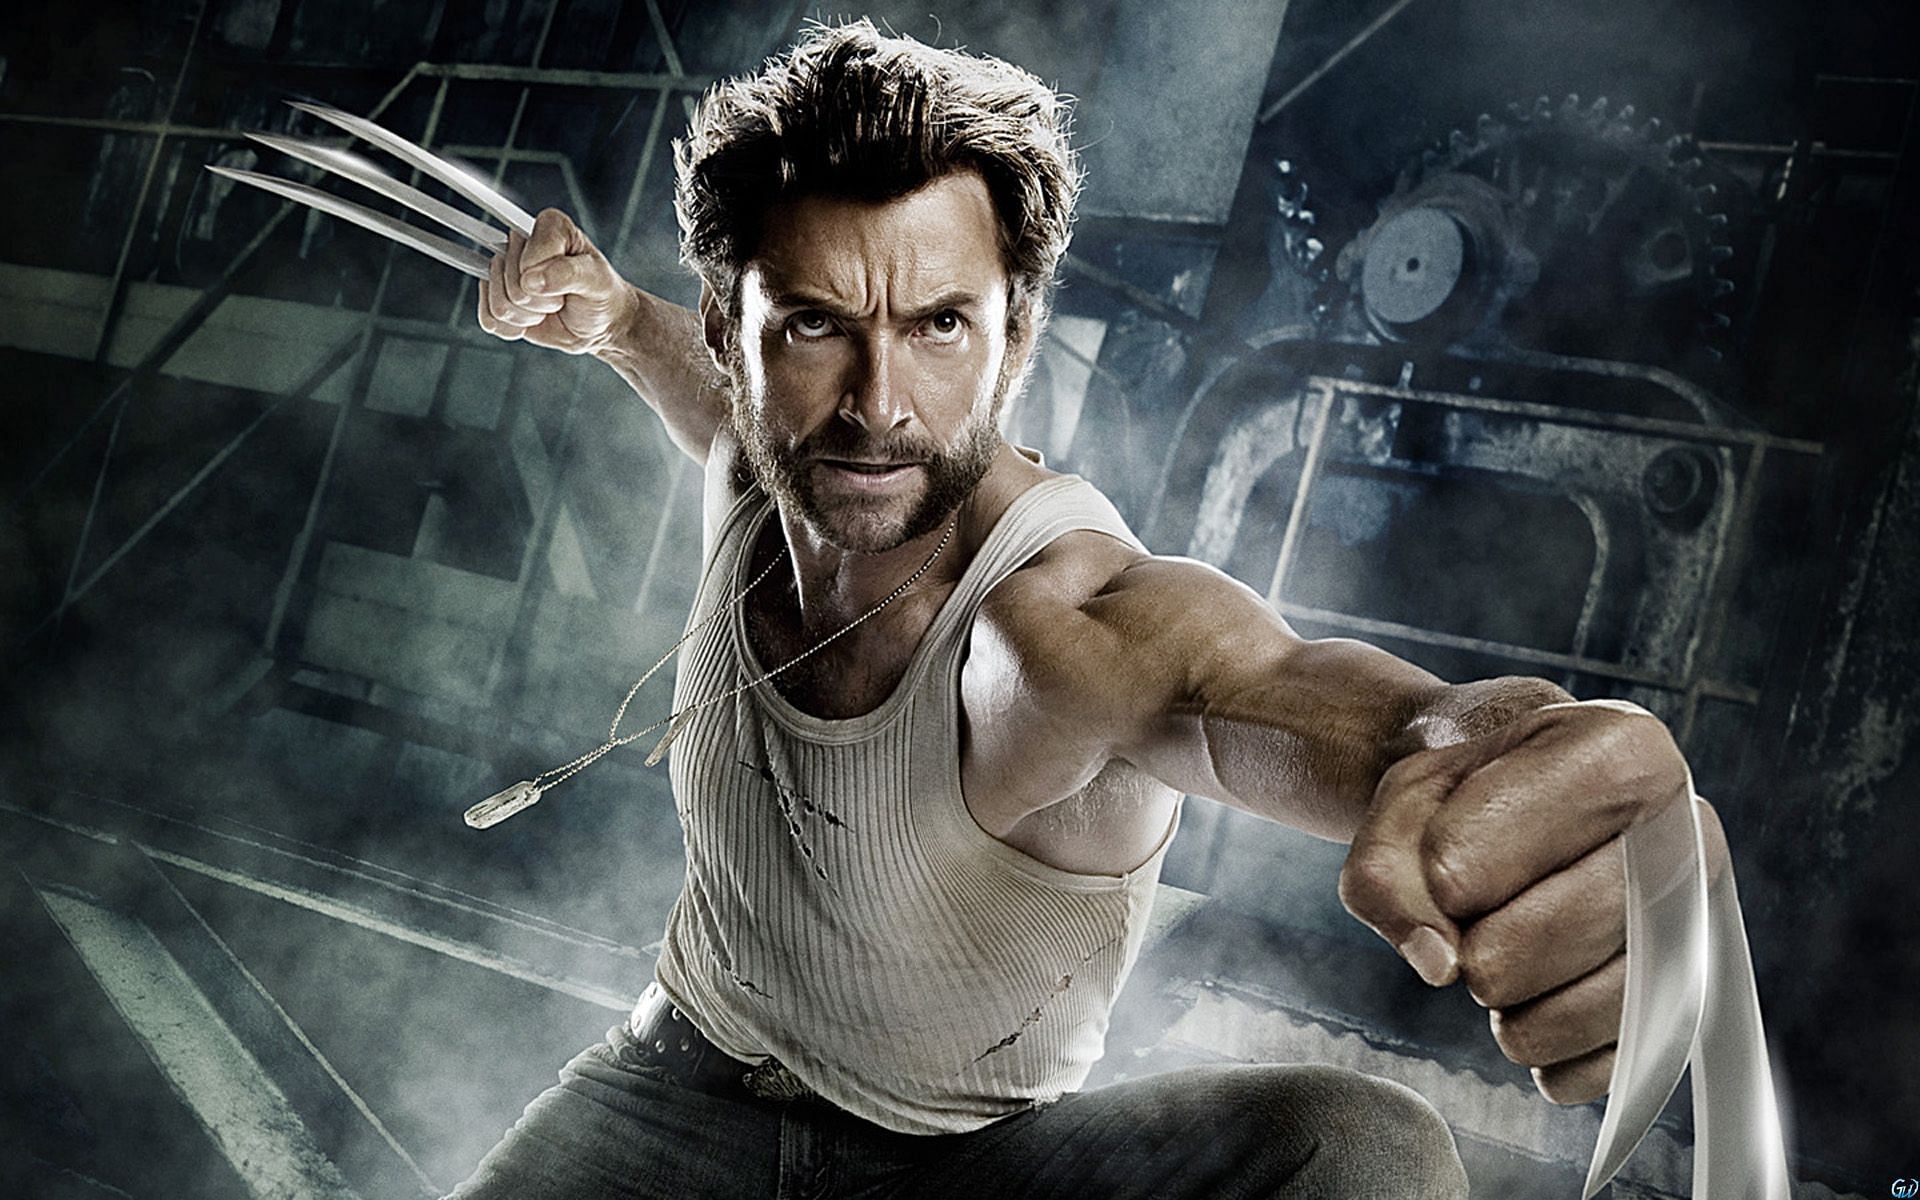 Wolverine in X-Men Origins: Wolverine (image via 20th Century Fox/Marvel)